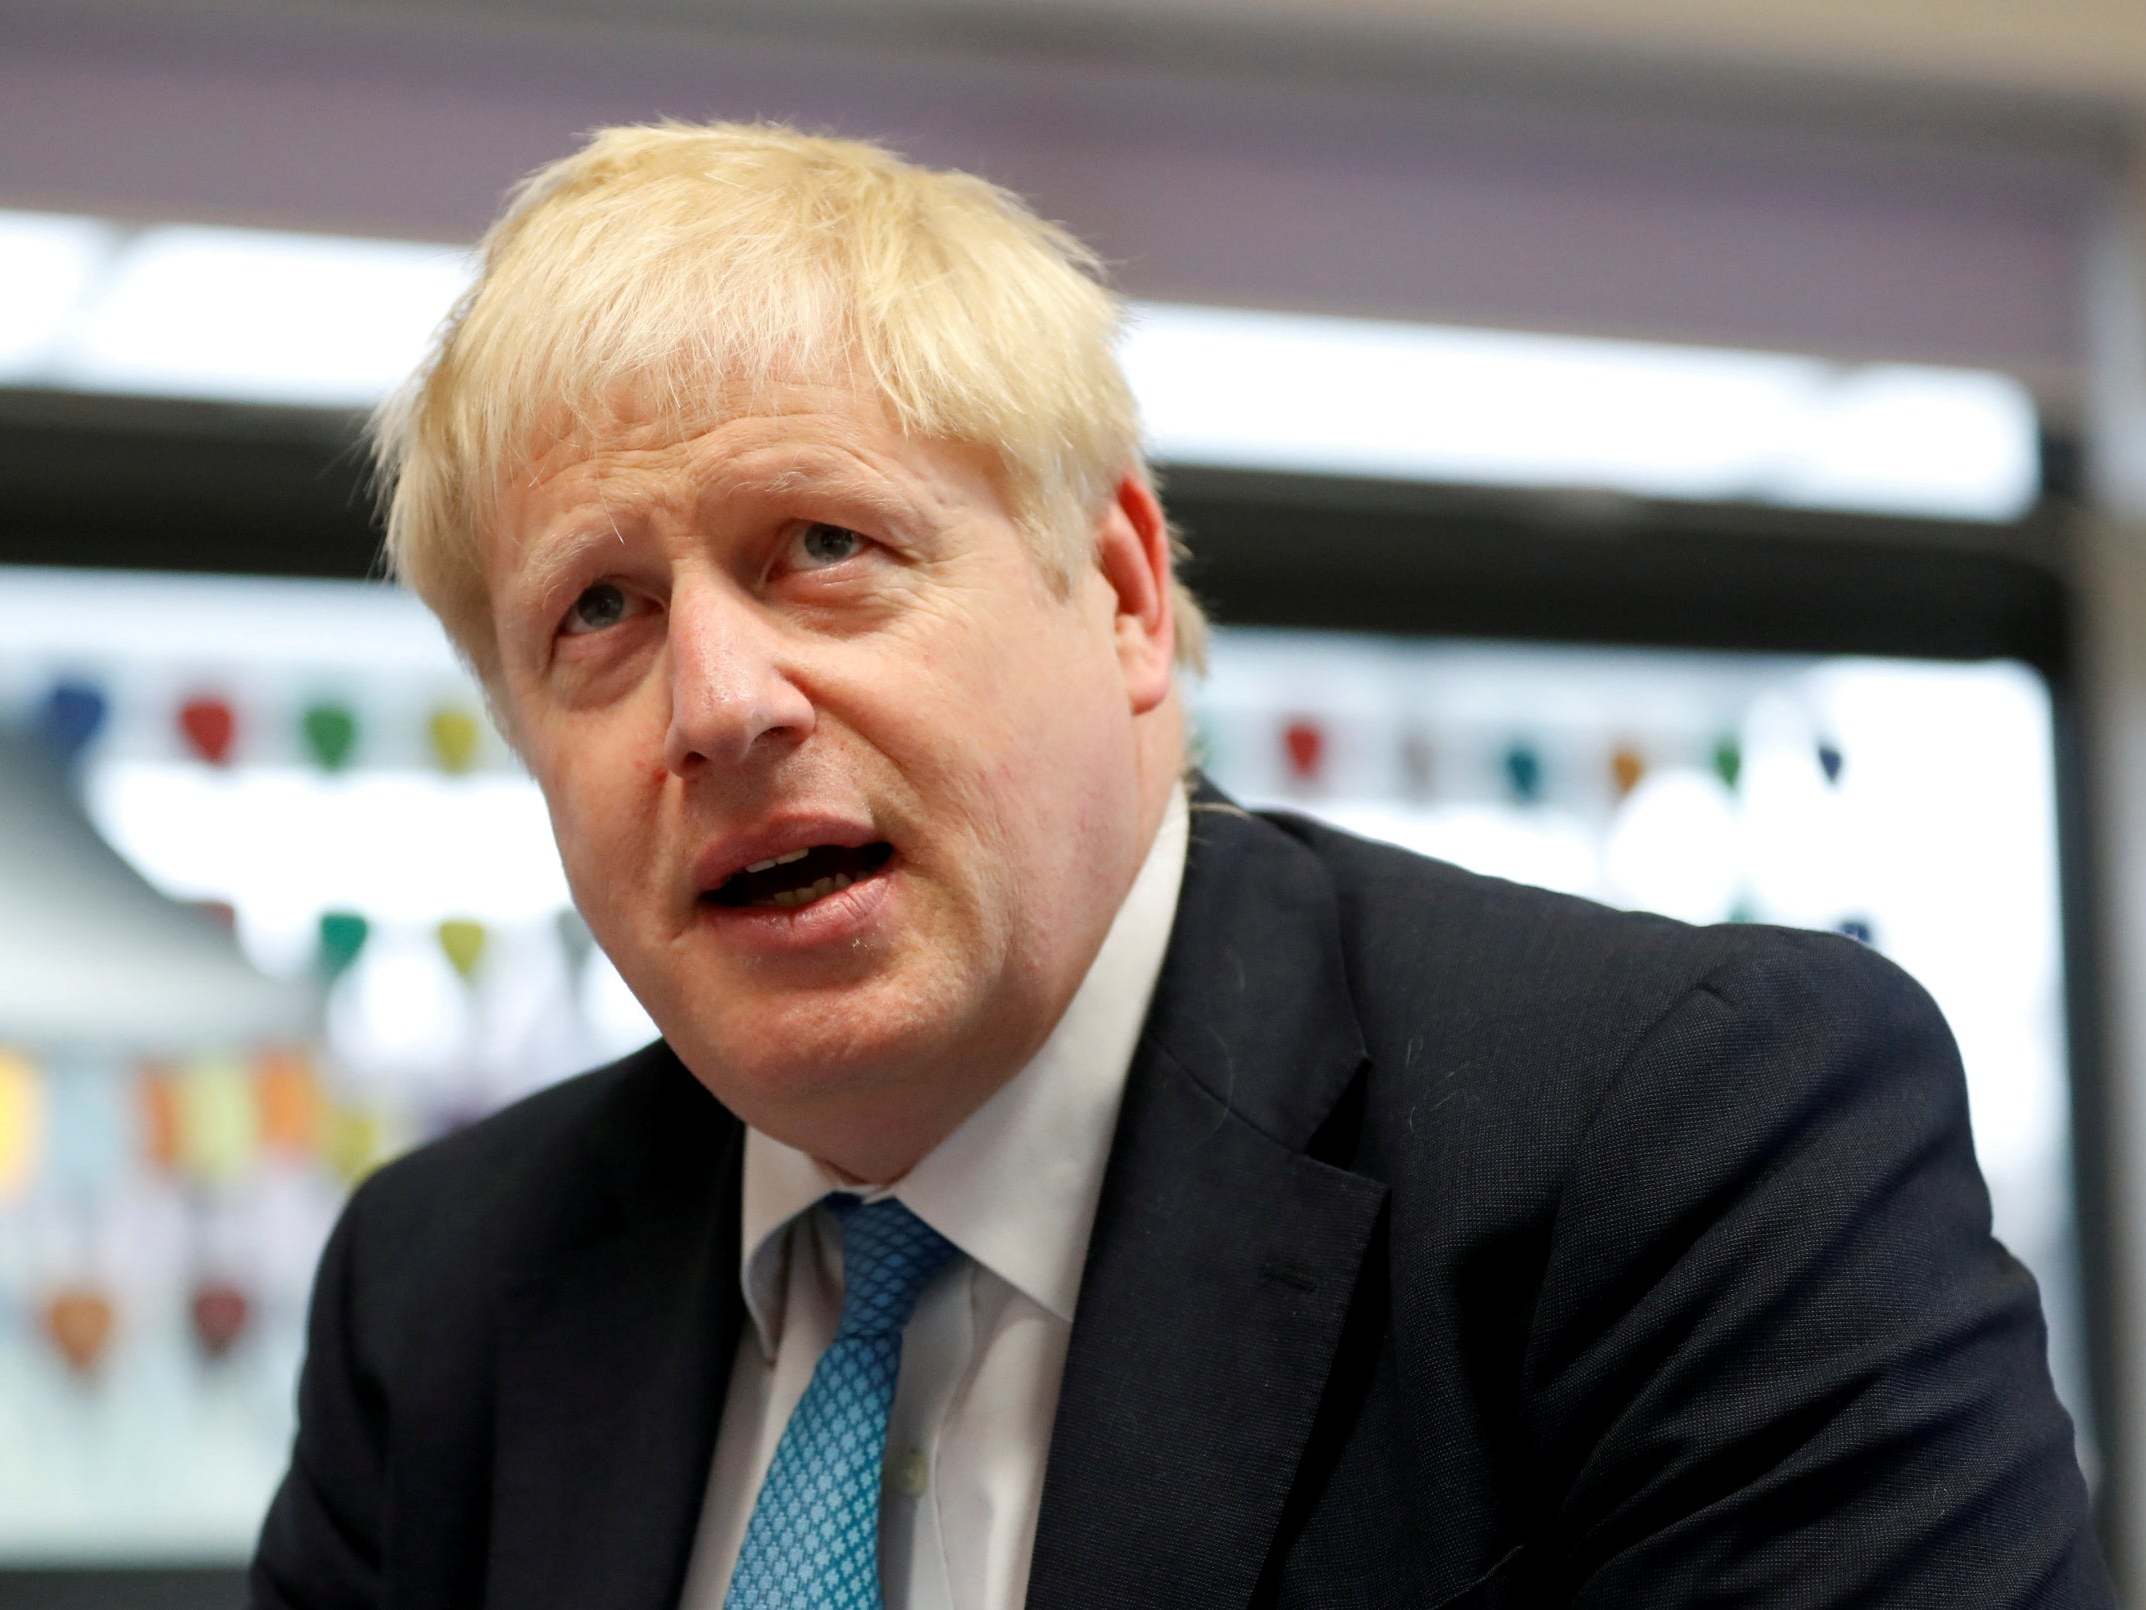 Boris Johnson is seeking a free trade agreement with the EU